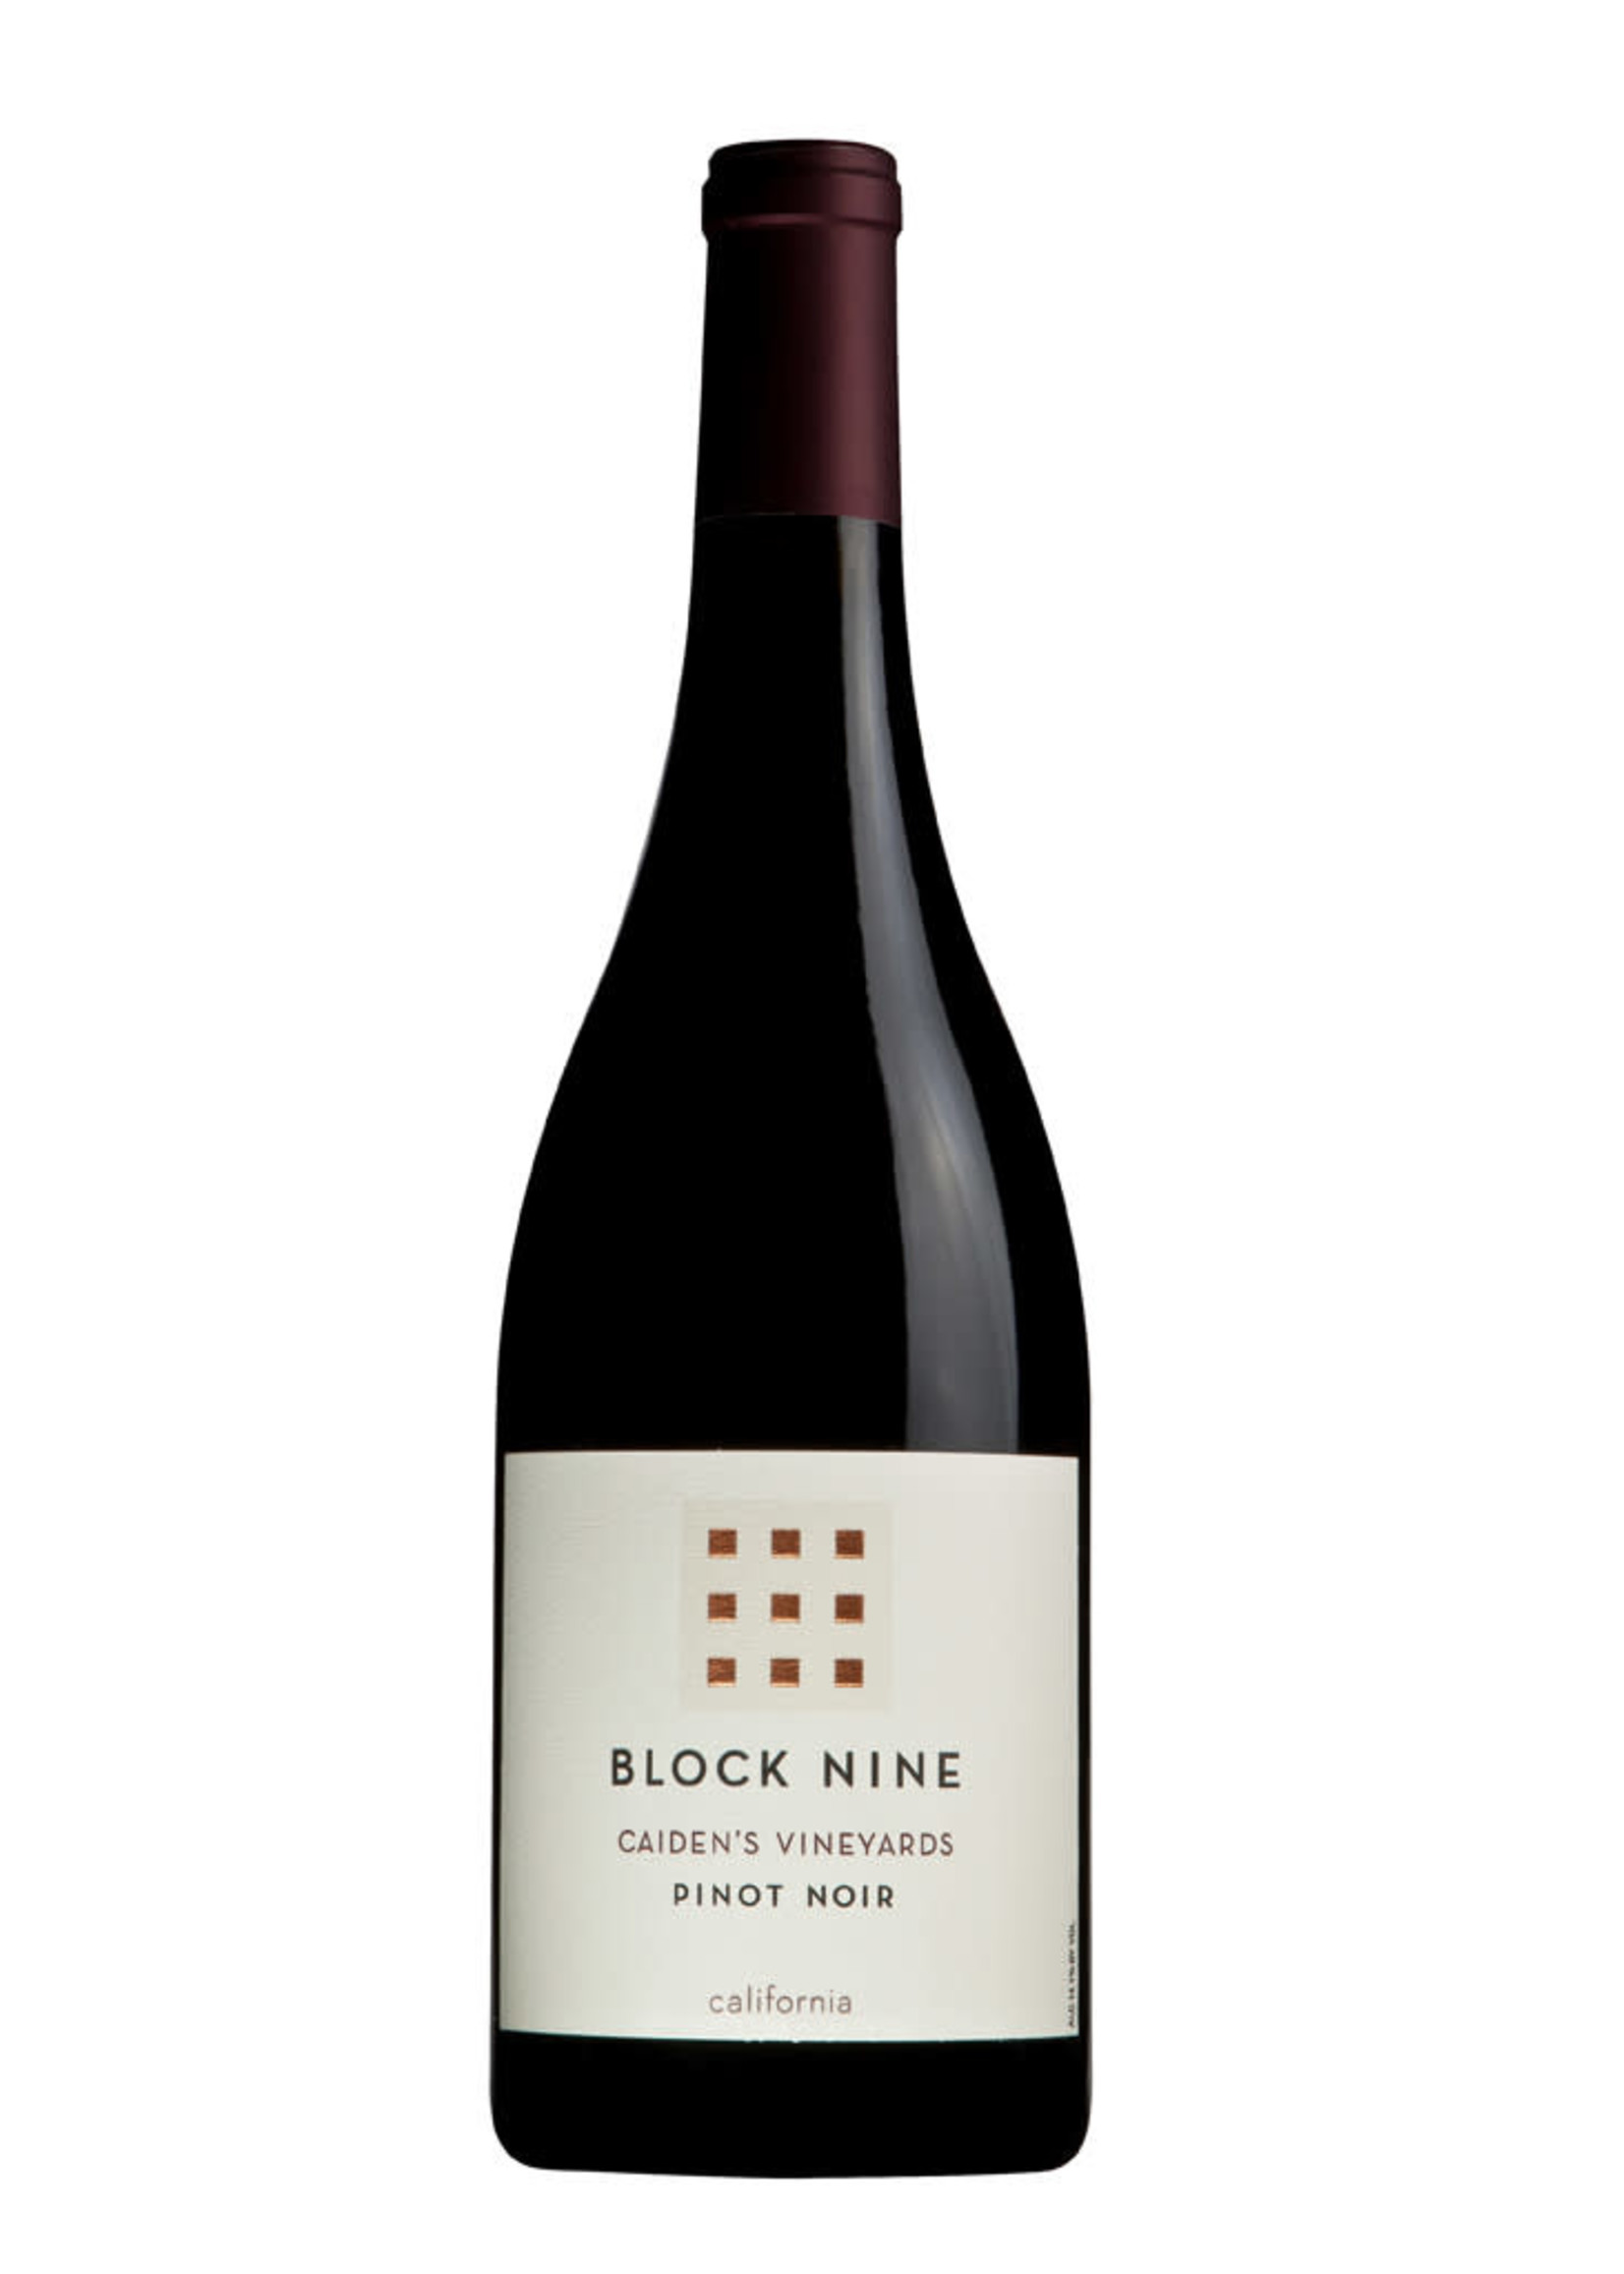 Block Nine 2020 Pinot Noir, Caiden's Vineyard, California